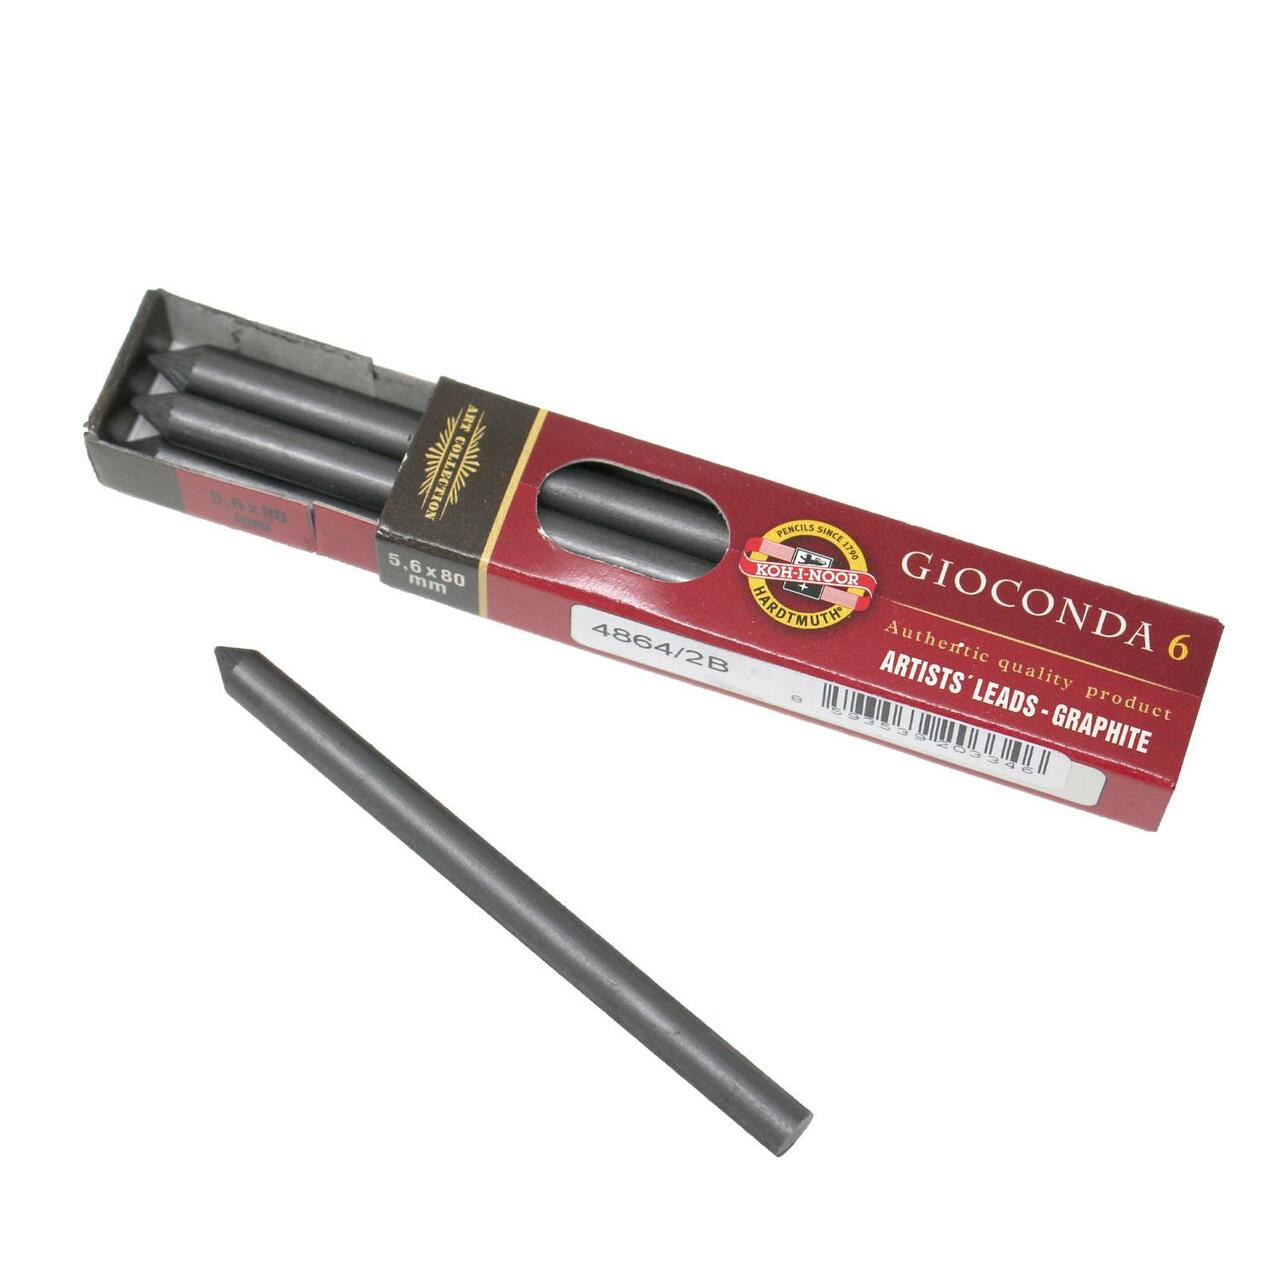 Koh-I-Noor 5.6mm Clutch Pencil Leads